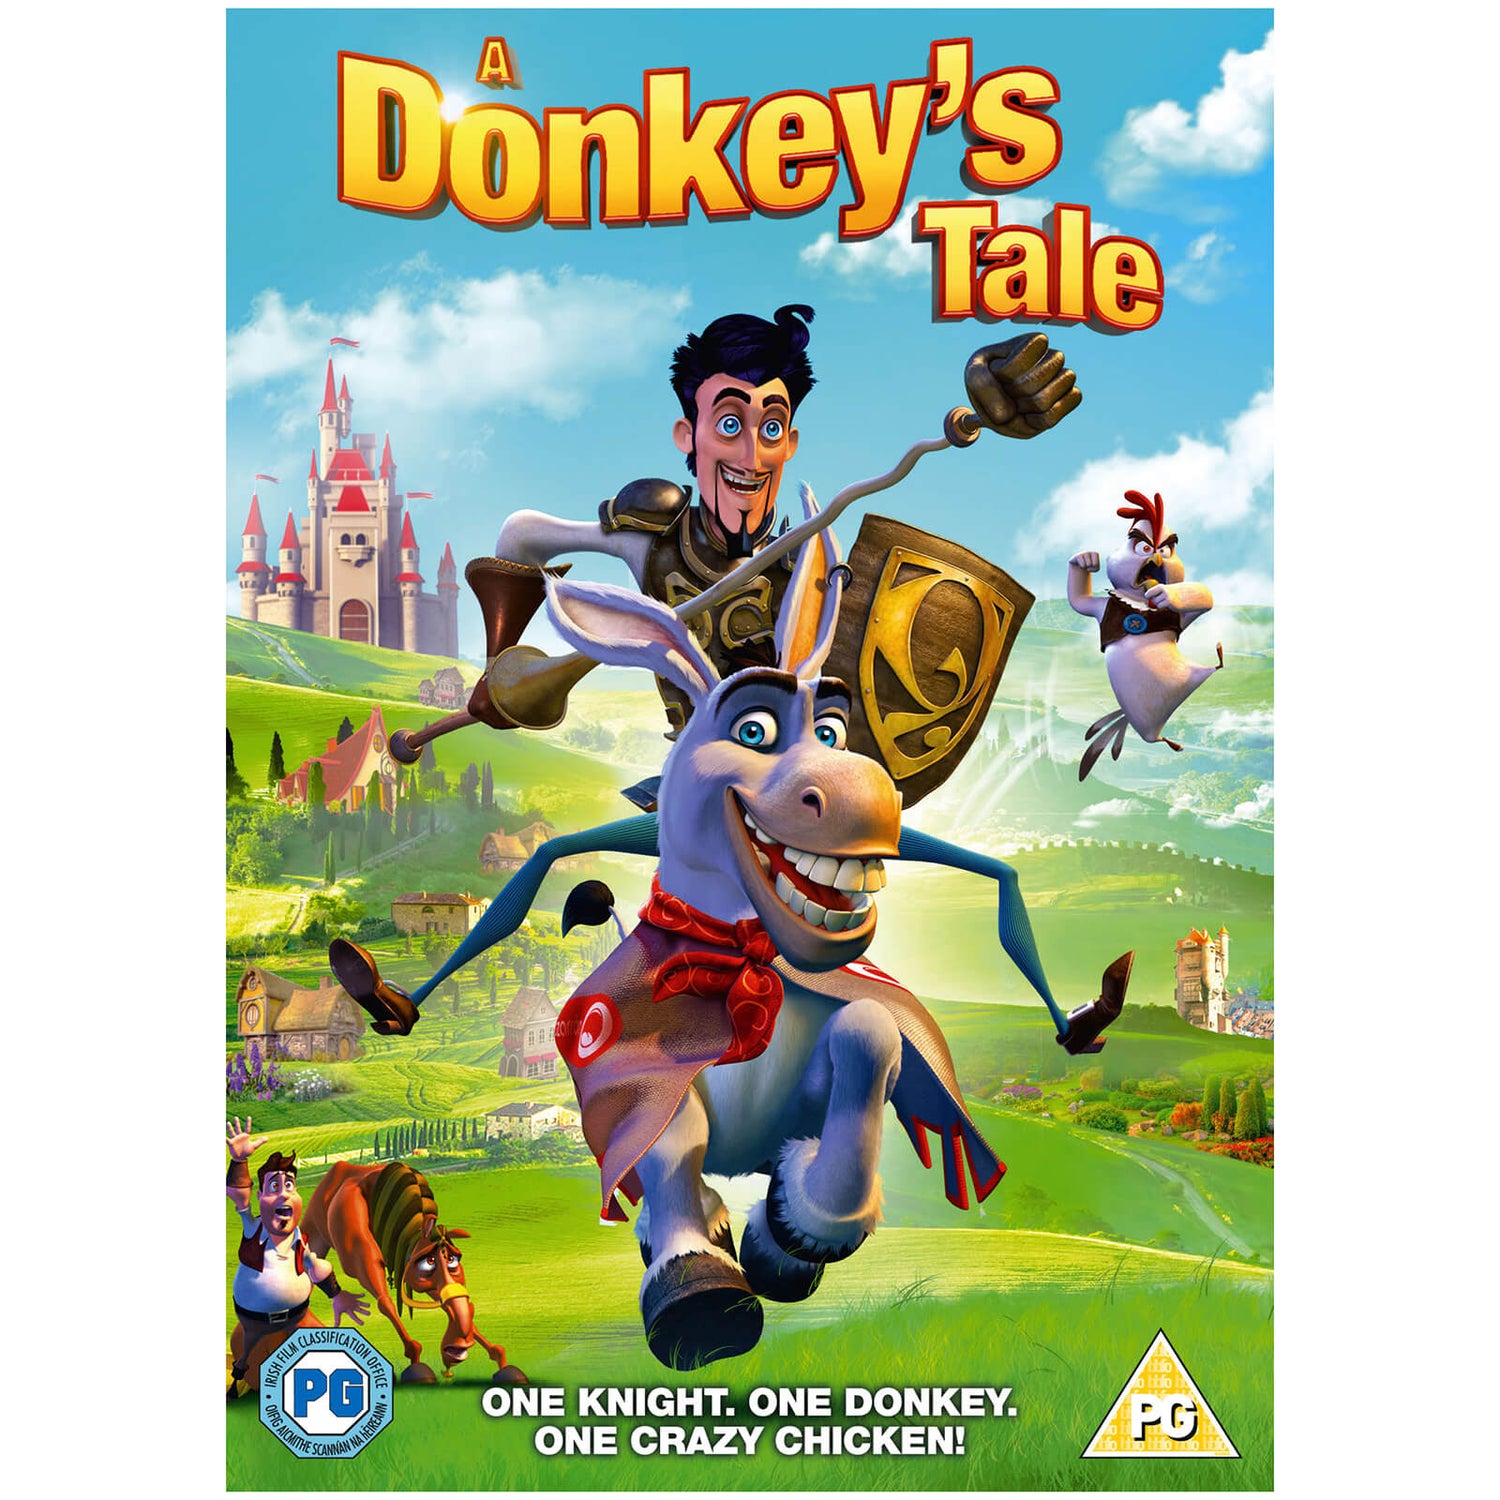 A Donkey's Tale